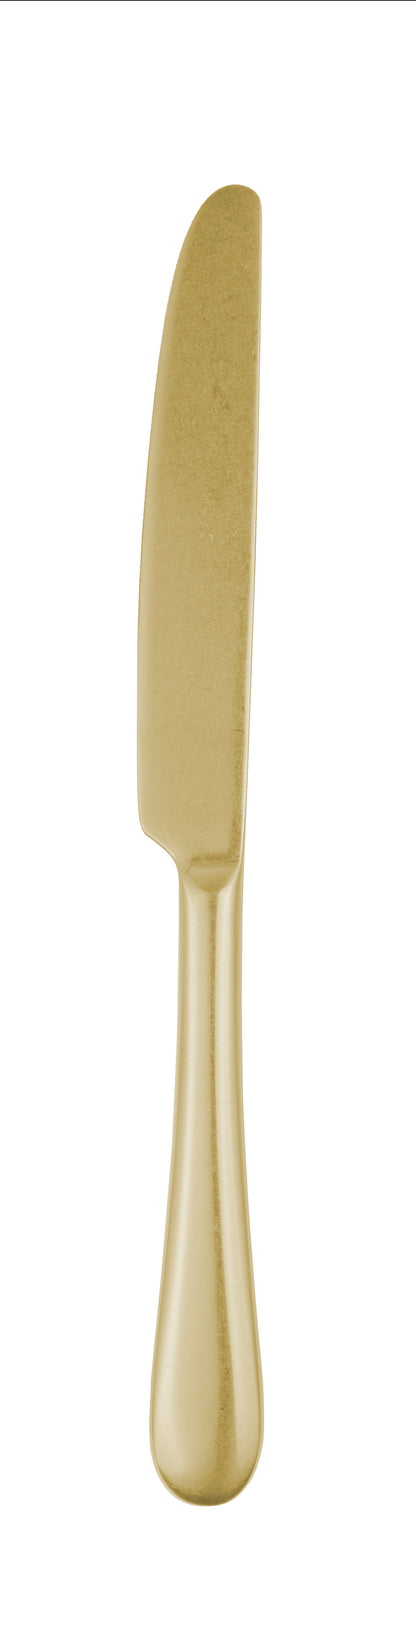 Dessert knife SIGNUM PVD pale gold stonewashed 213mm